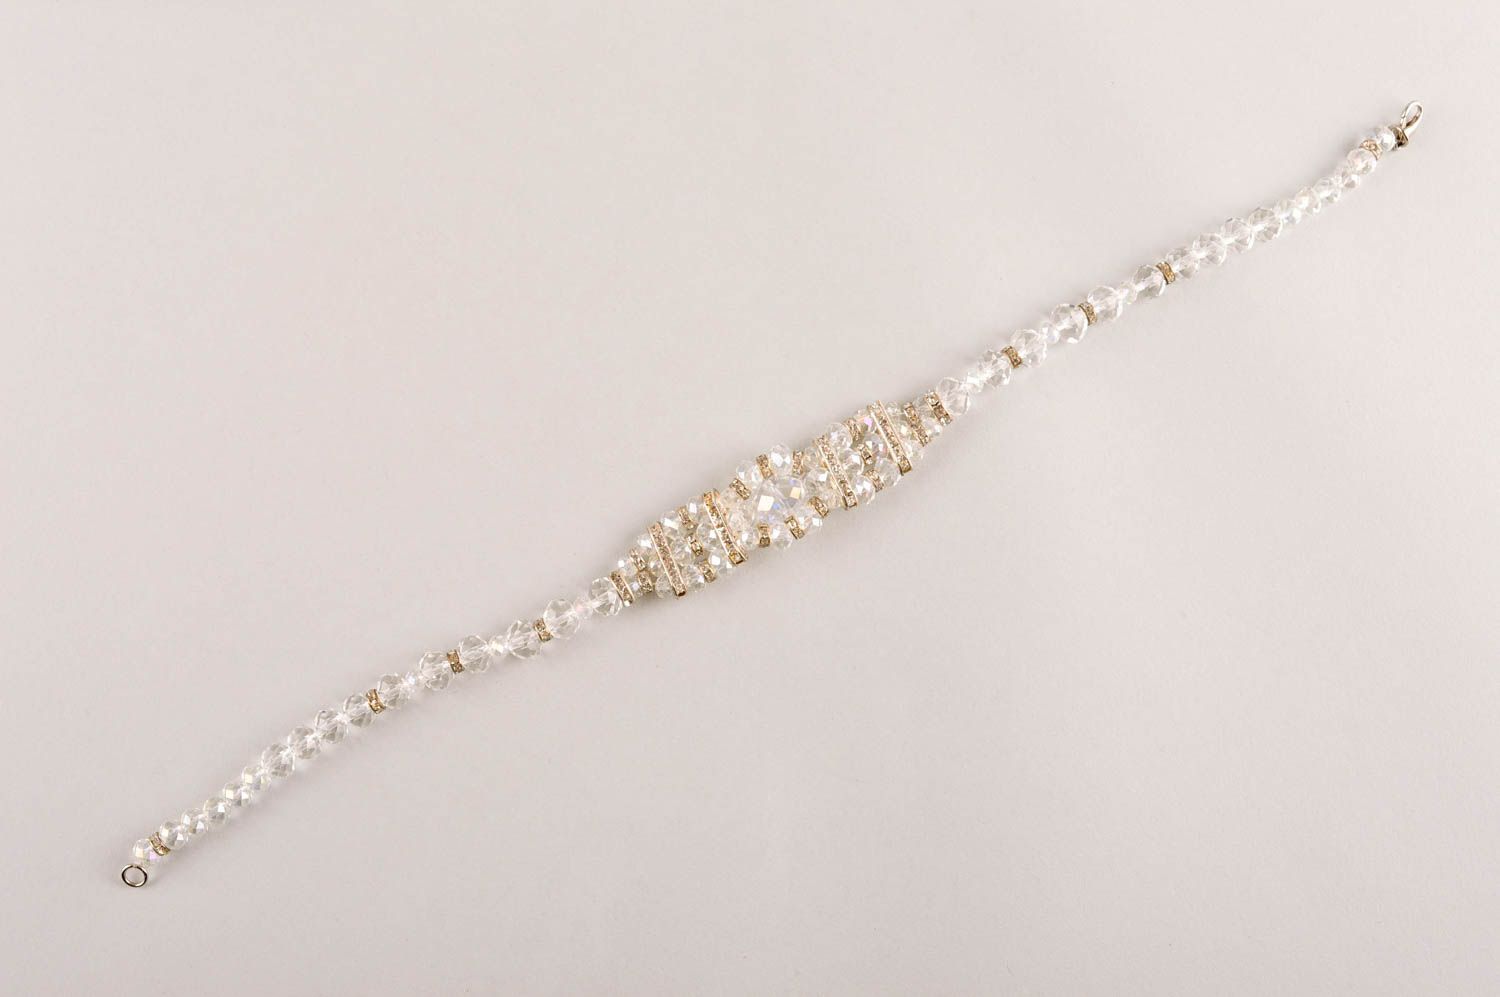 Handmade crystal beads designer collar unique bijouterie accessories for her photo 5